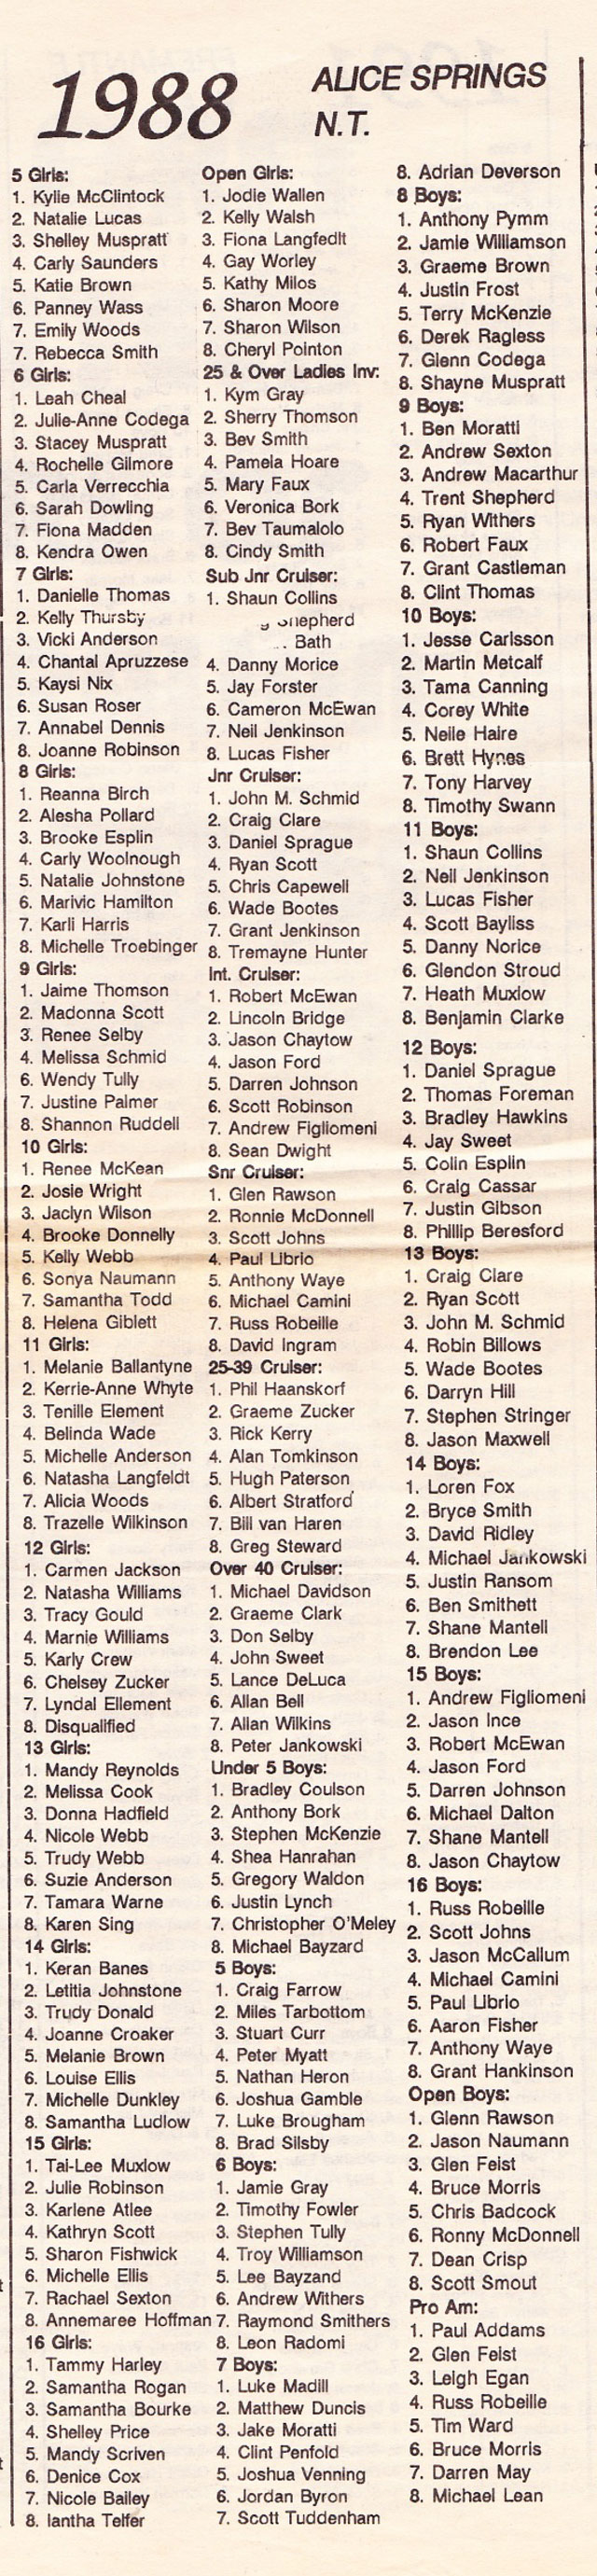 australian-bmx-championships-1988